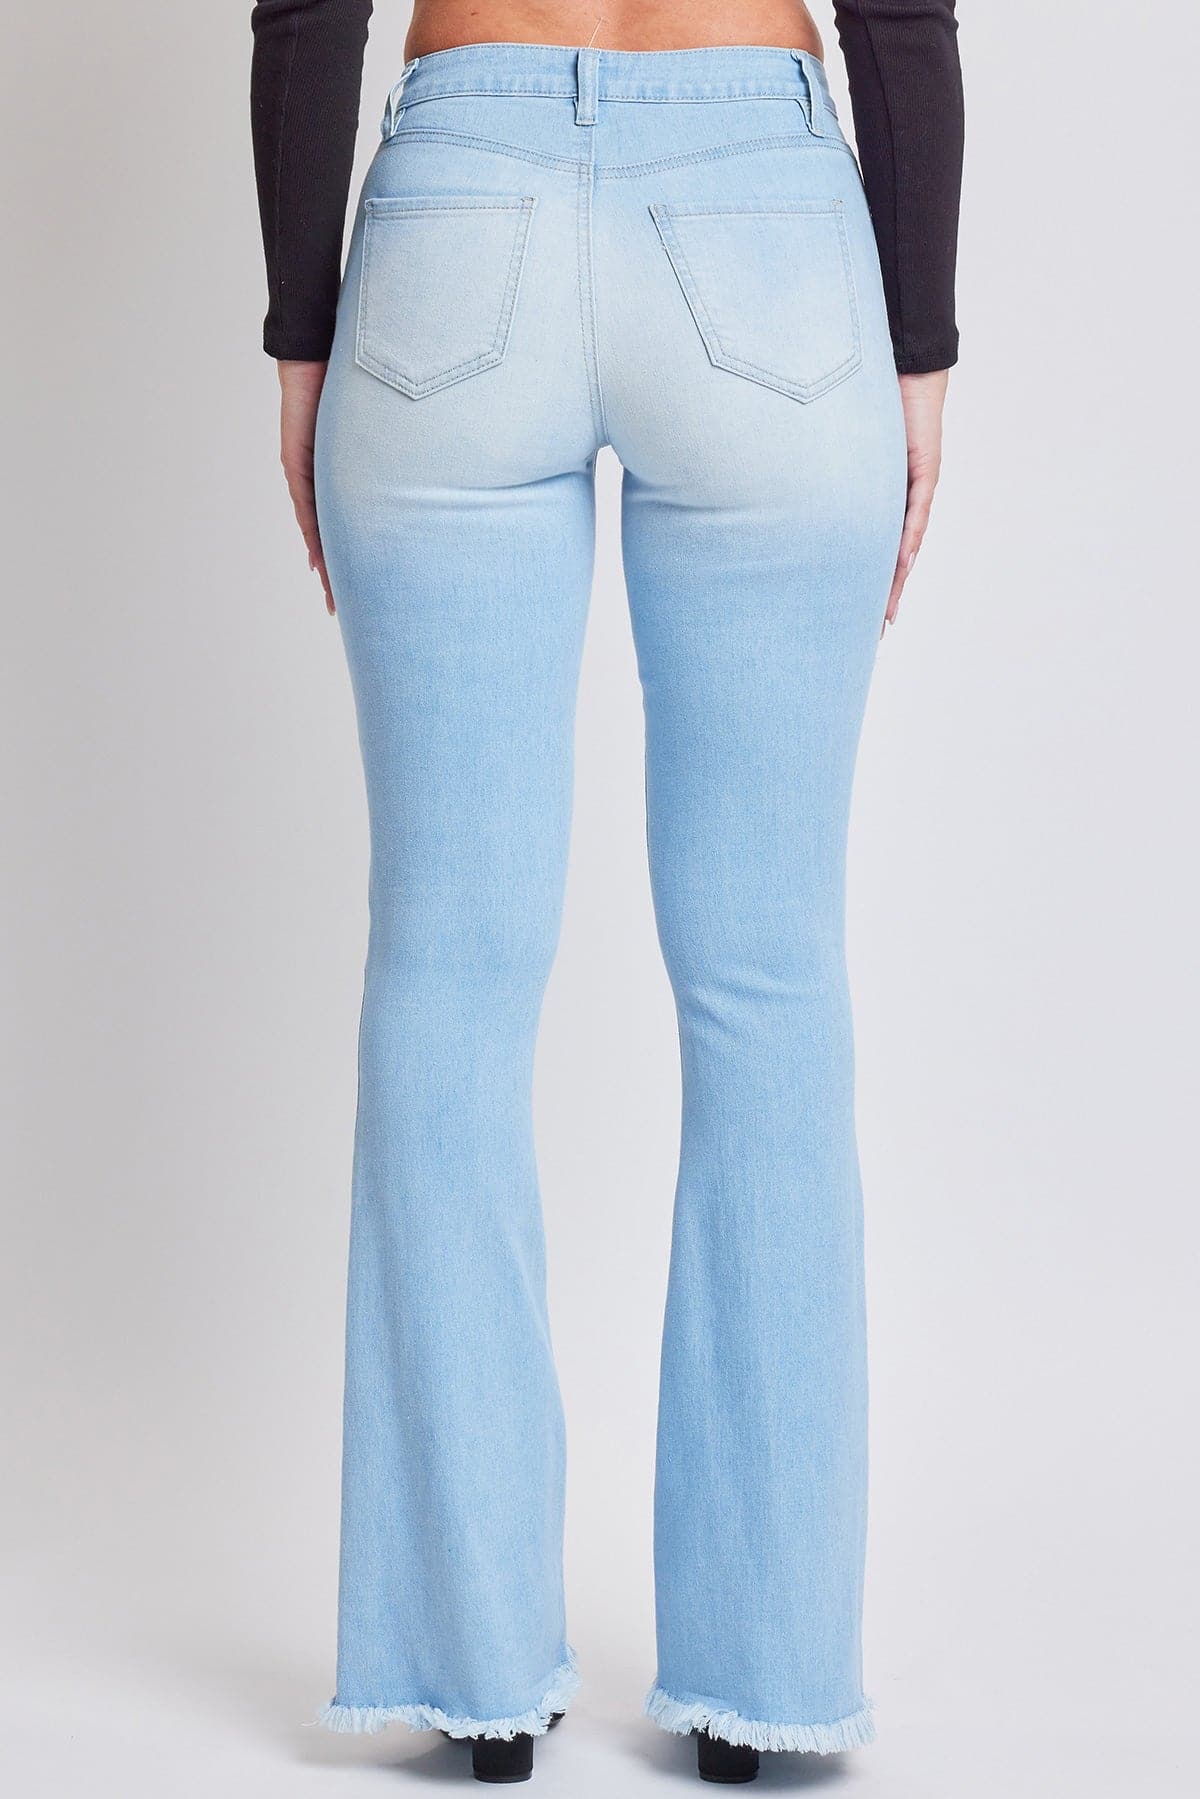 Women's Essential  Super Flare Jeans - Long Inseam